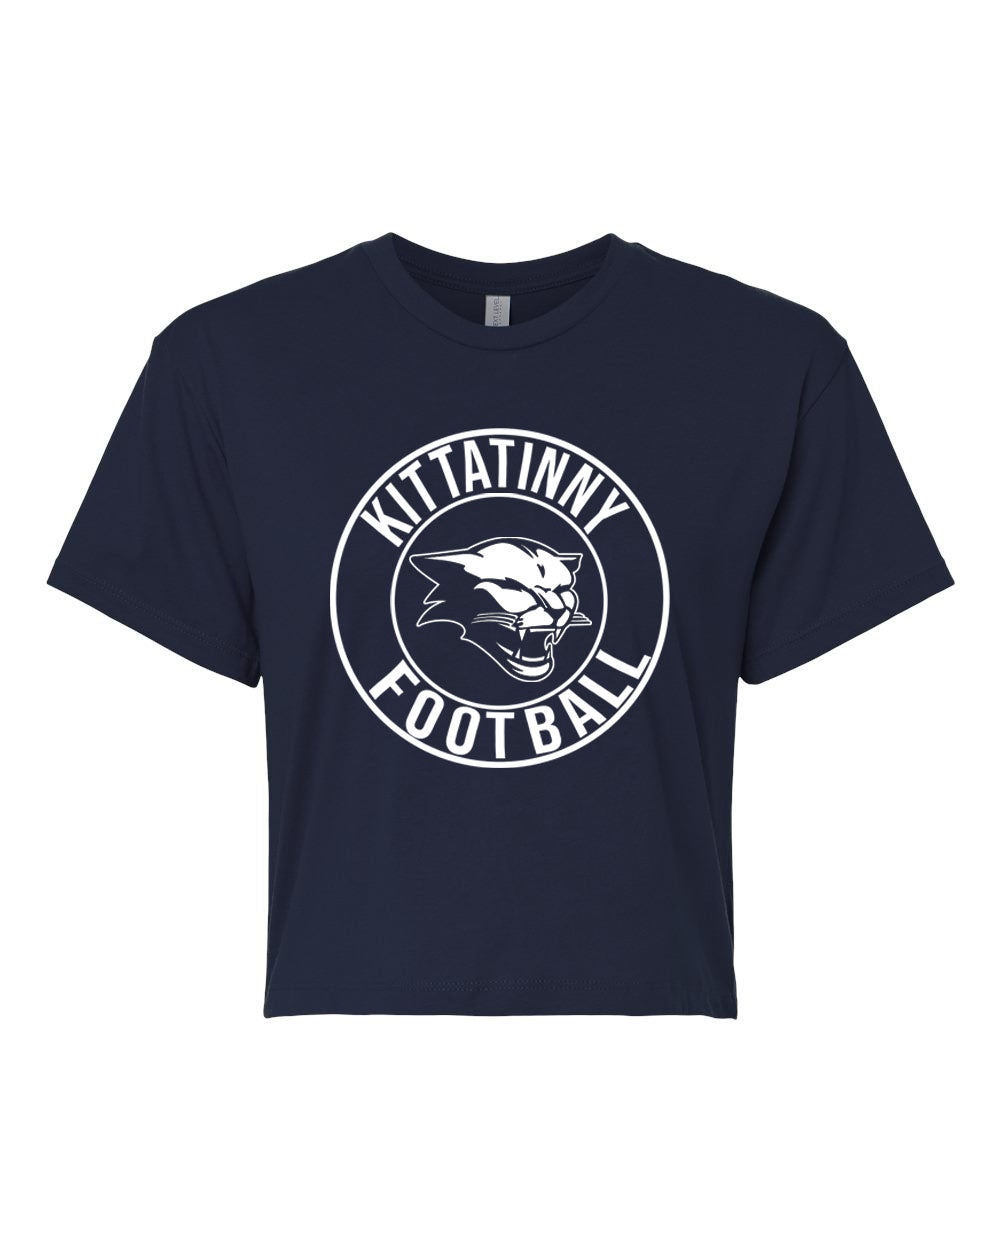 Kittatinny Football Design 5 Crop Top